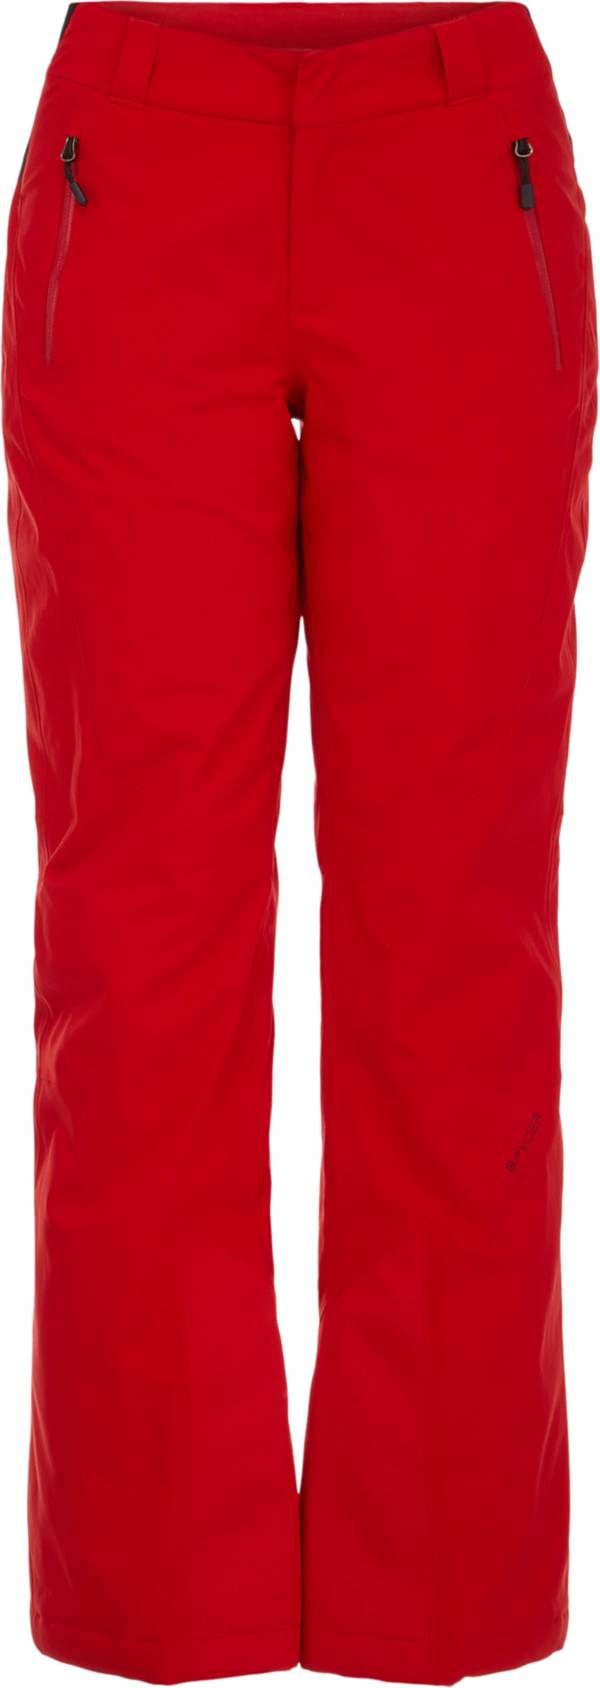 Spyder Women's Winner GTX Pants product image